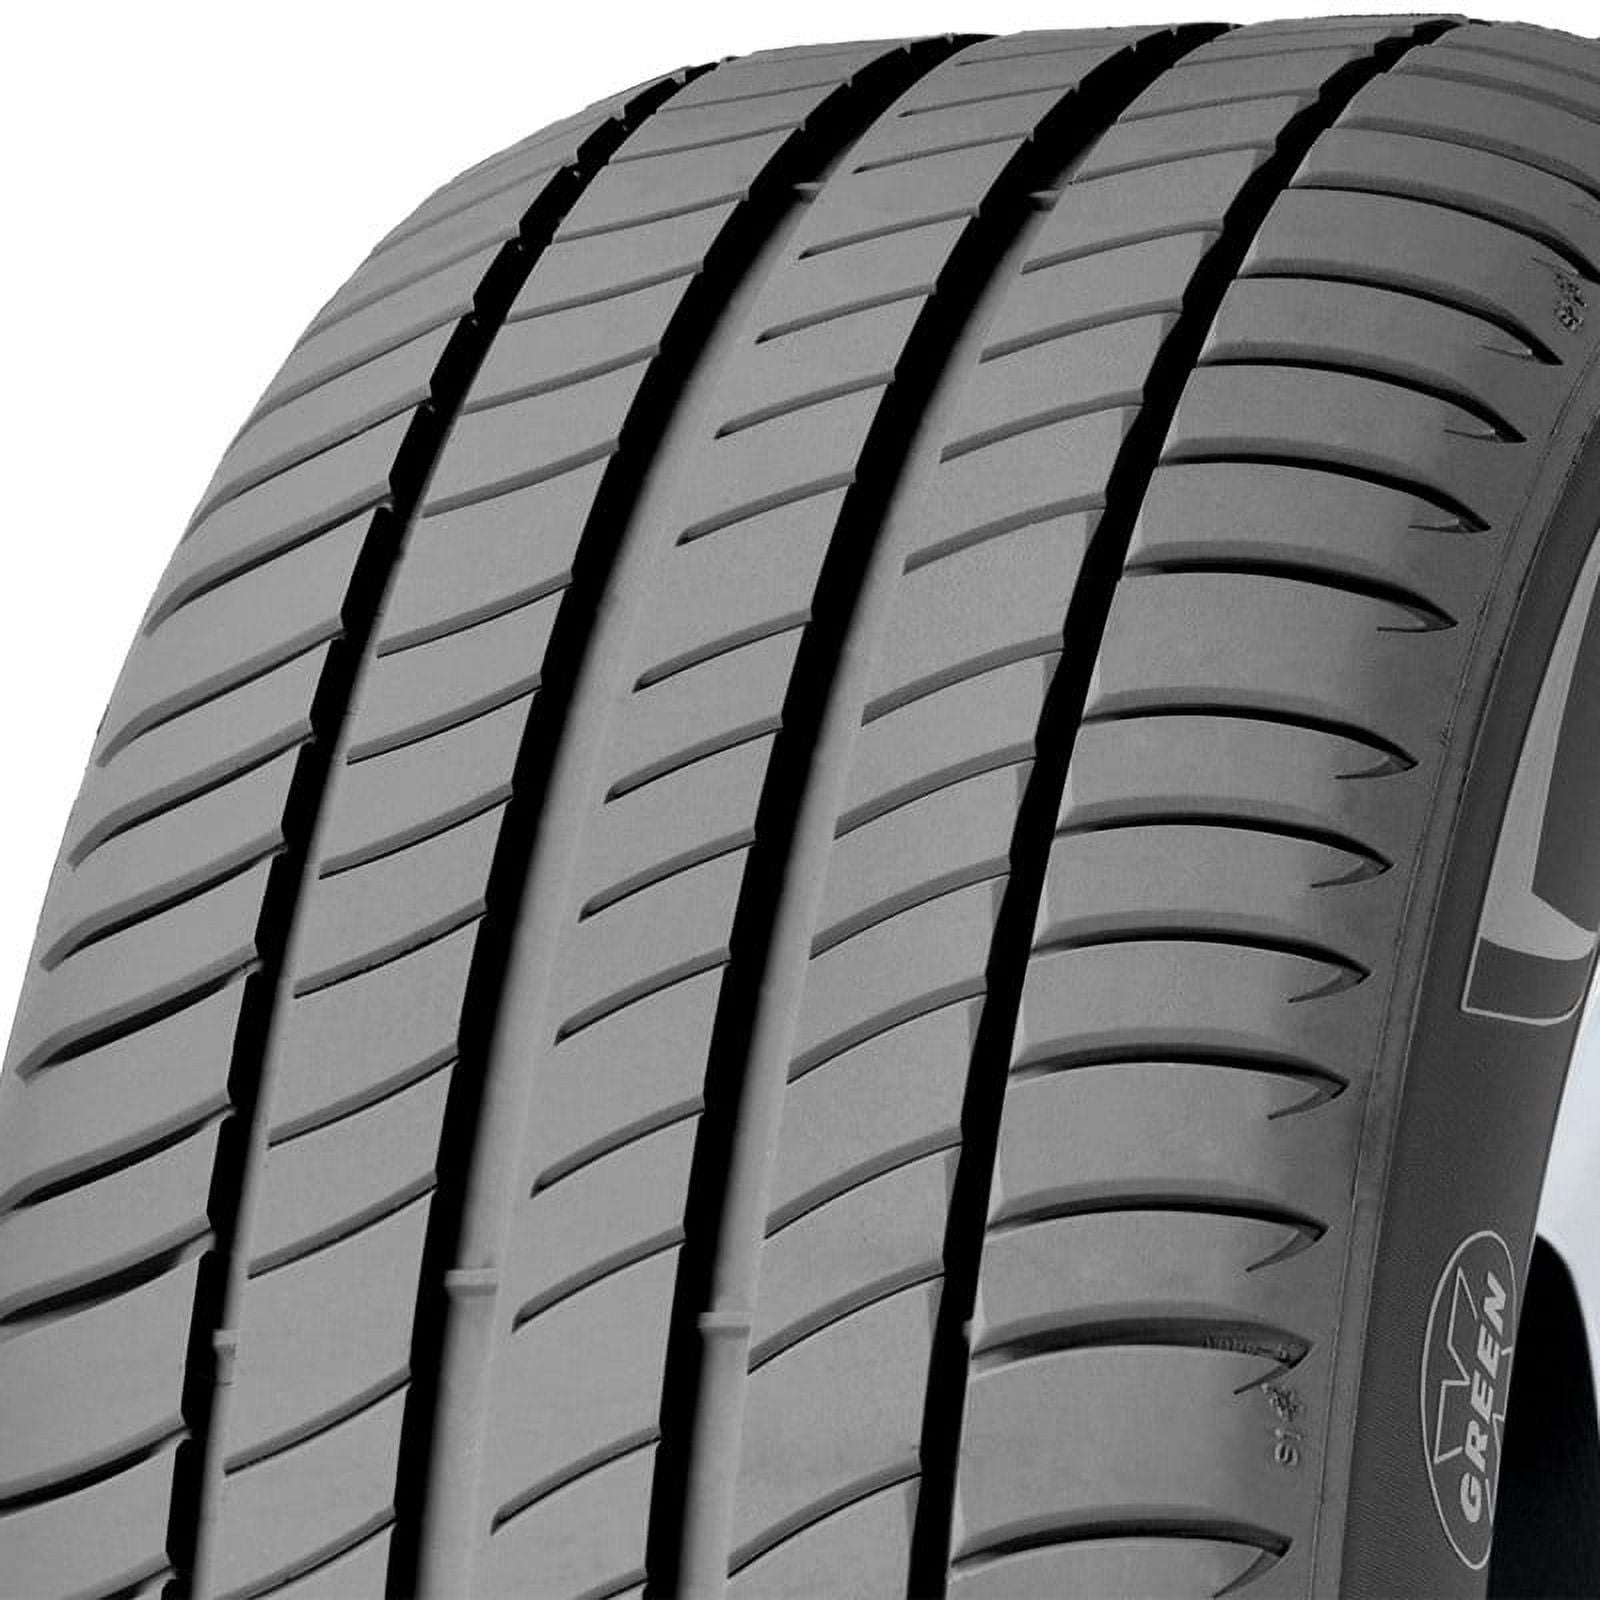 Michelin Primacy 3 Highway Tire 225/45R17 91W | Autoreifen